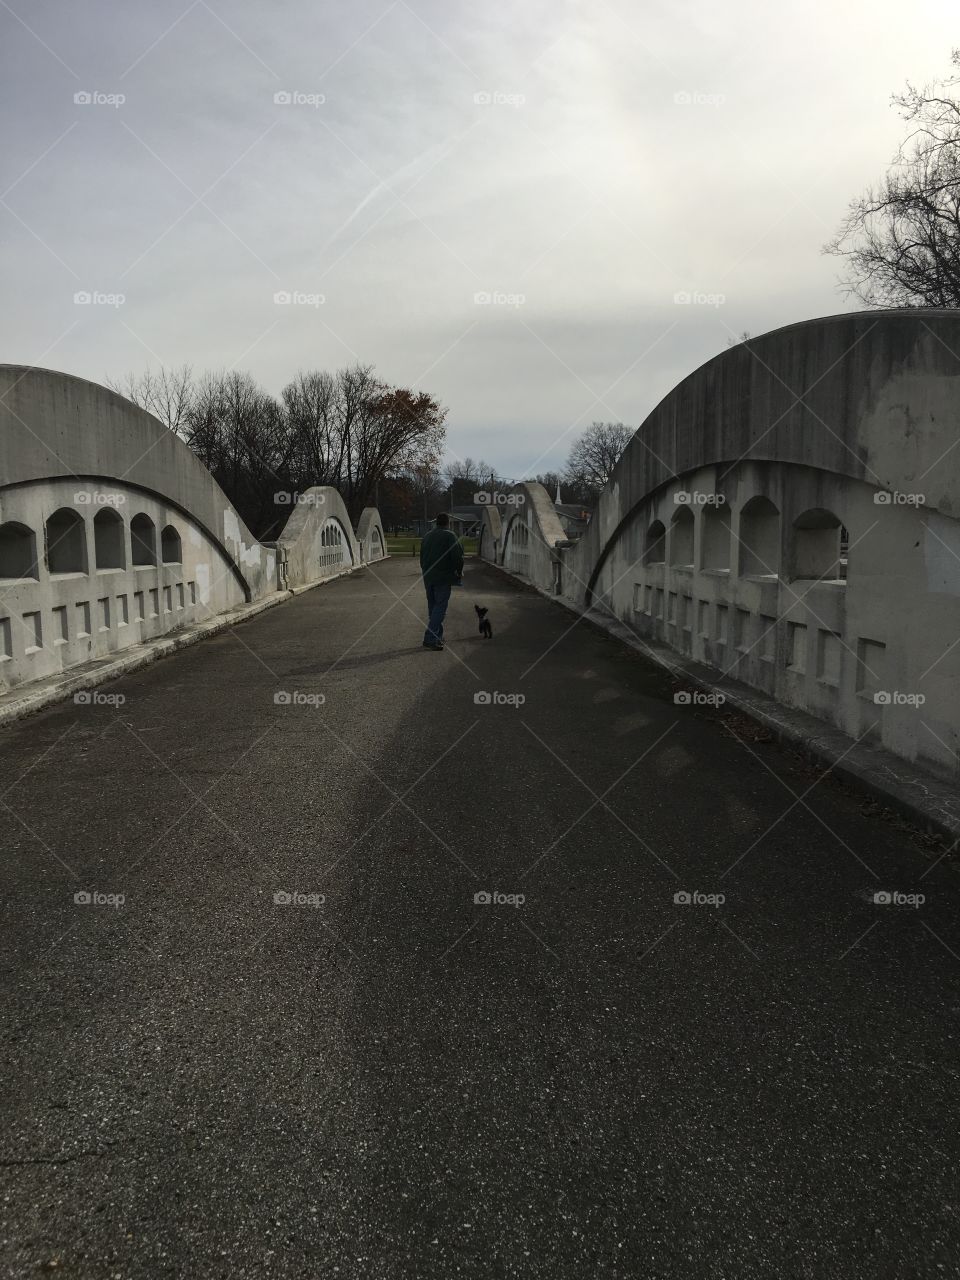 Walk on a bridge